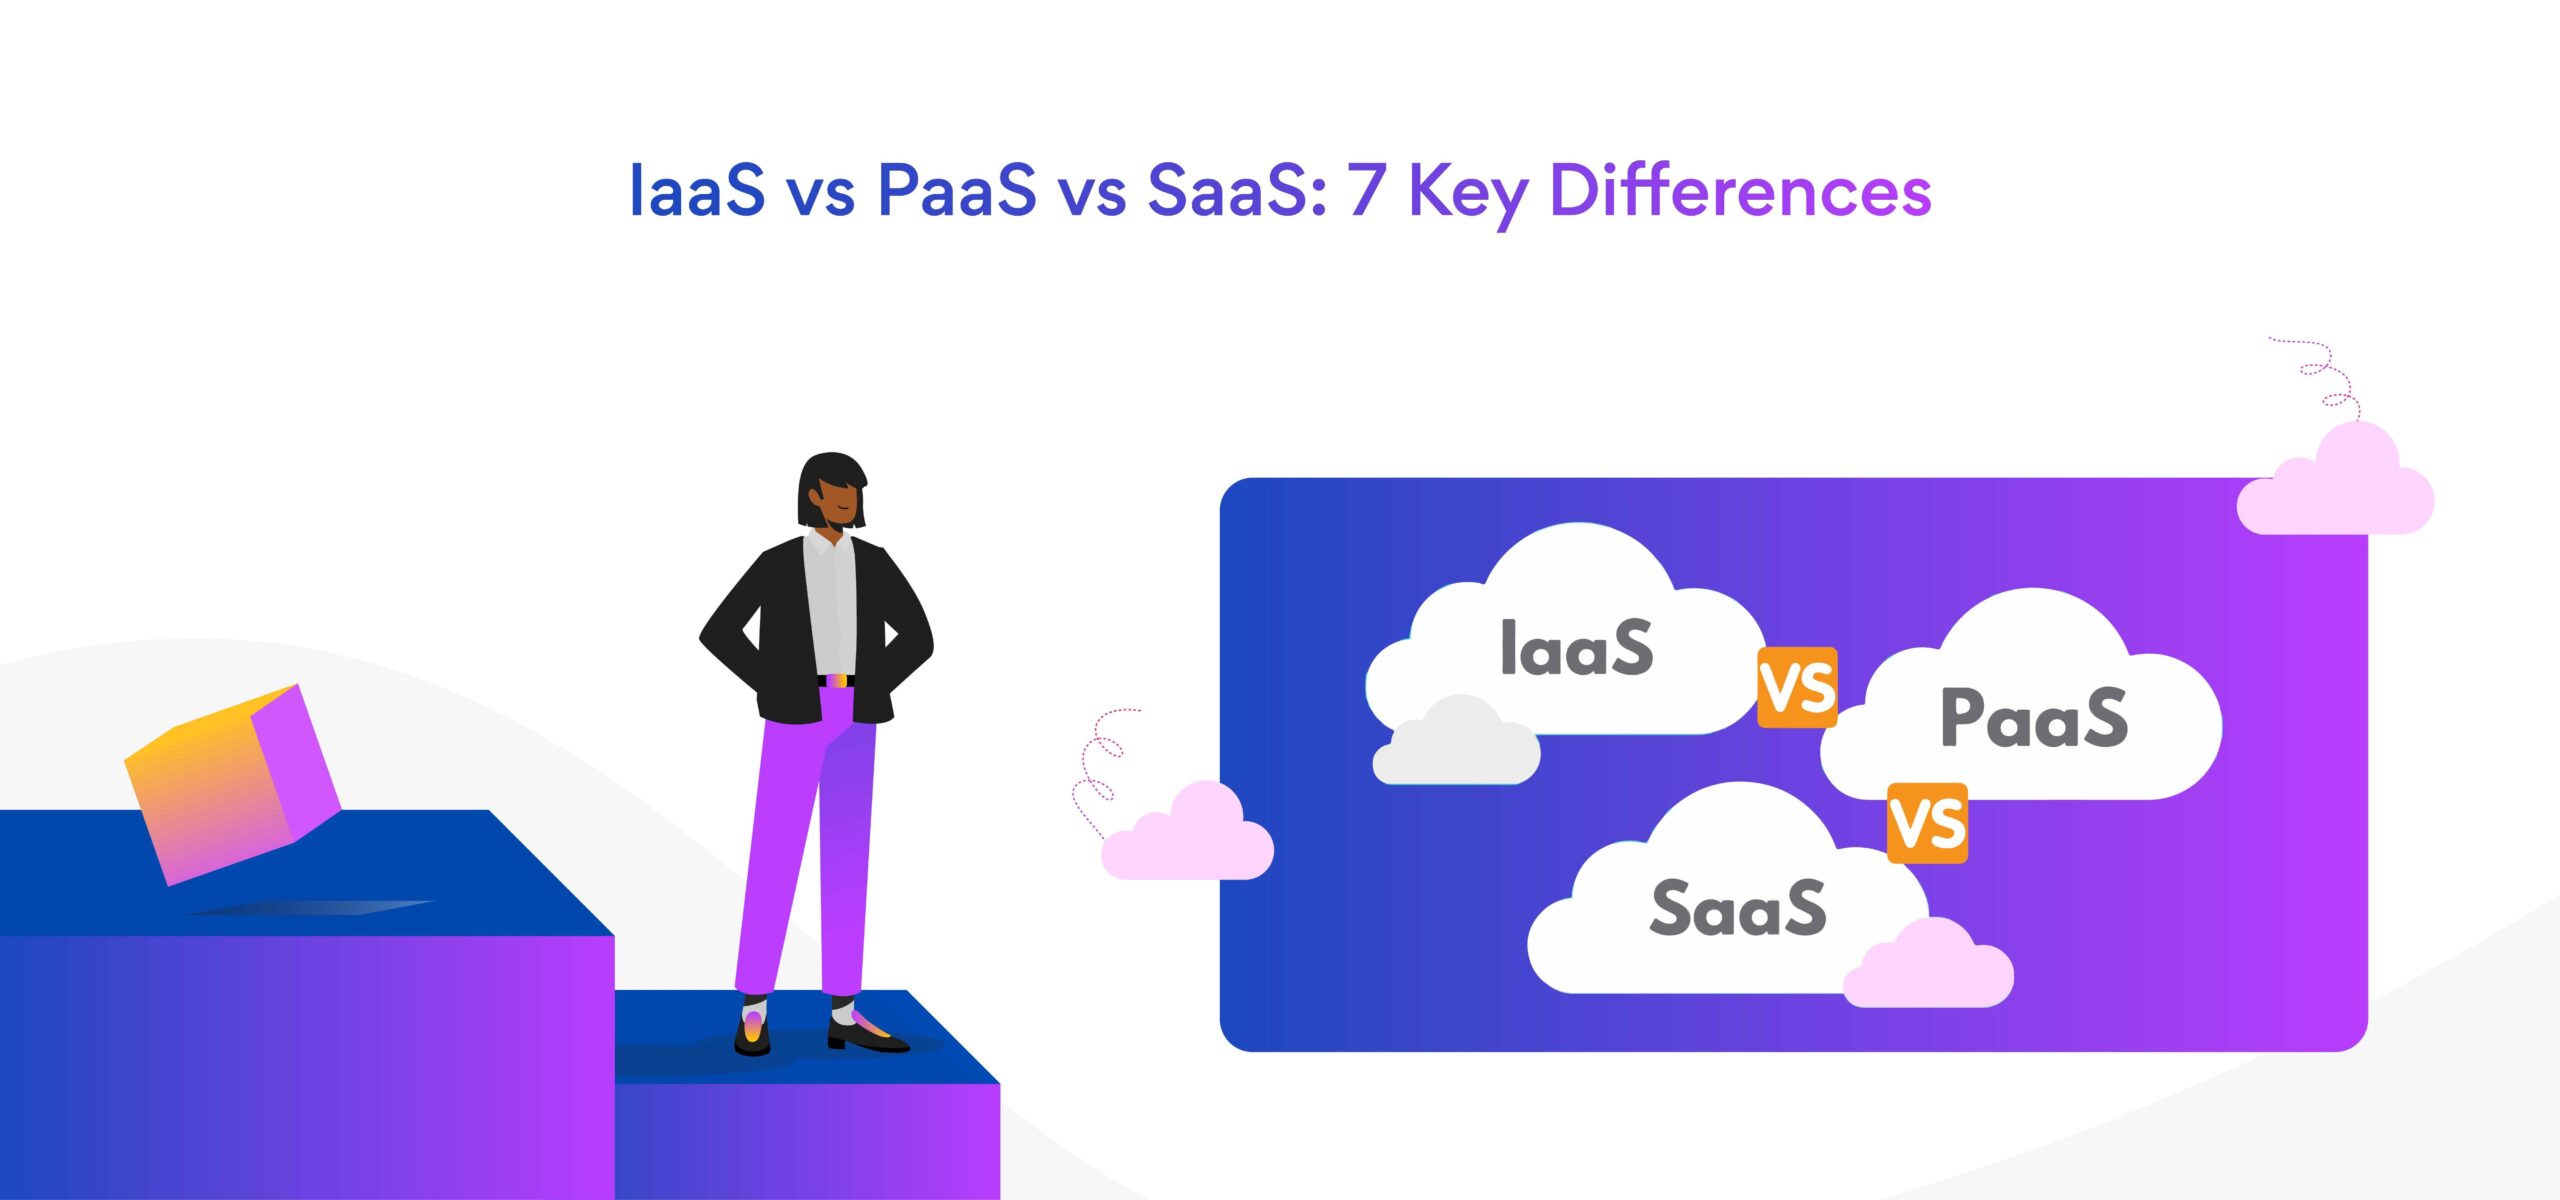 IaaS vs PaaS vs SaaS